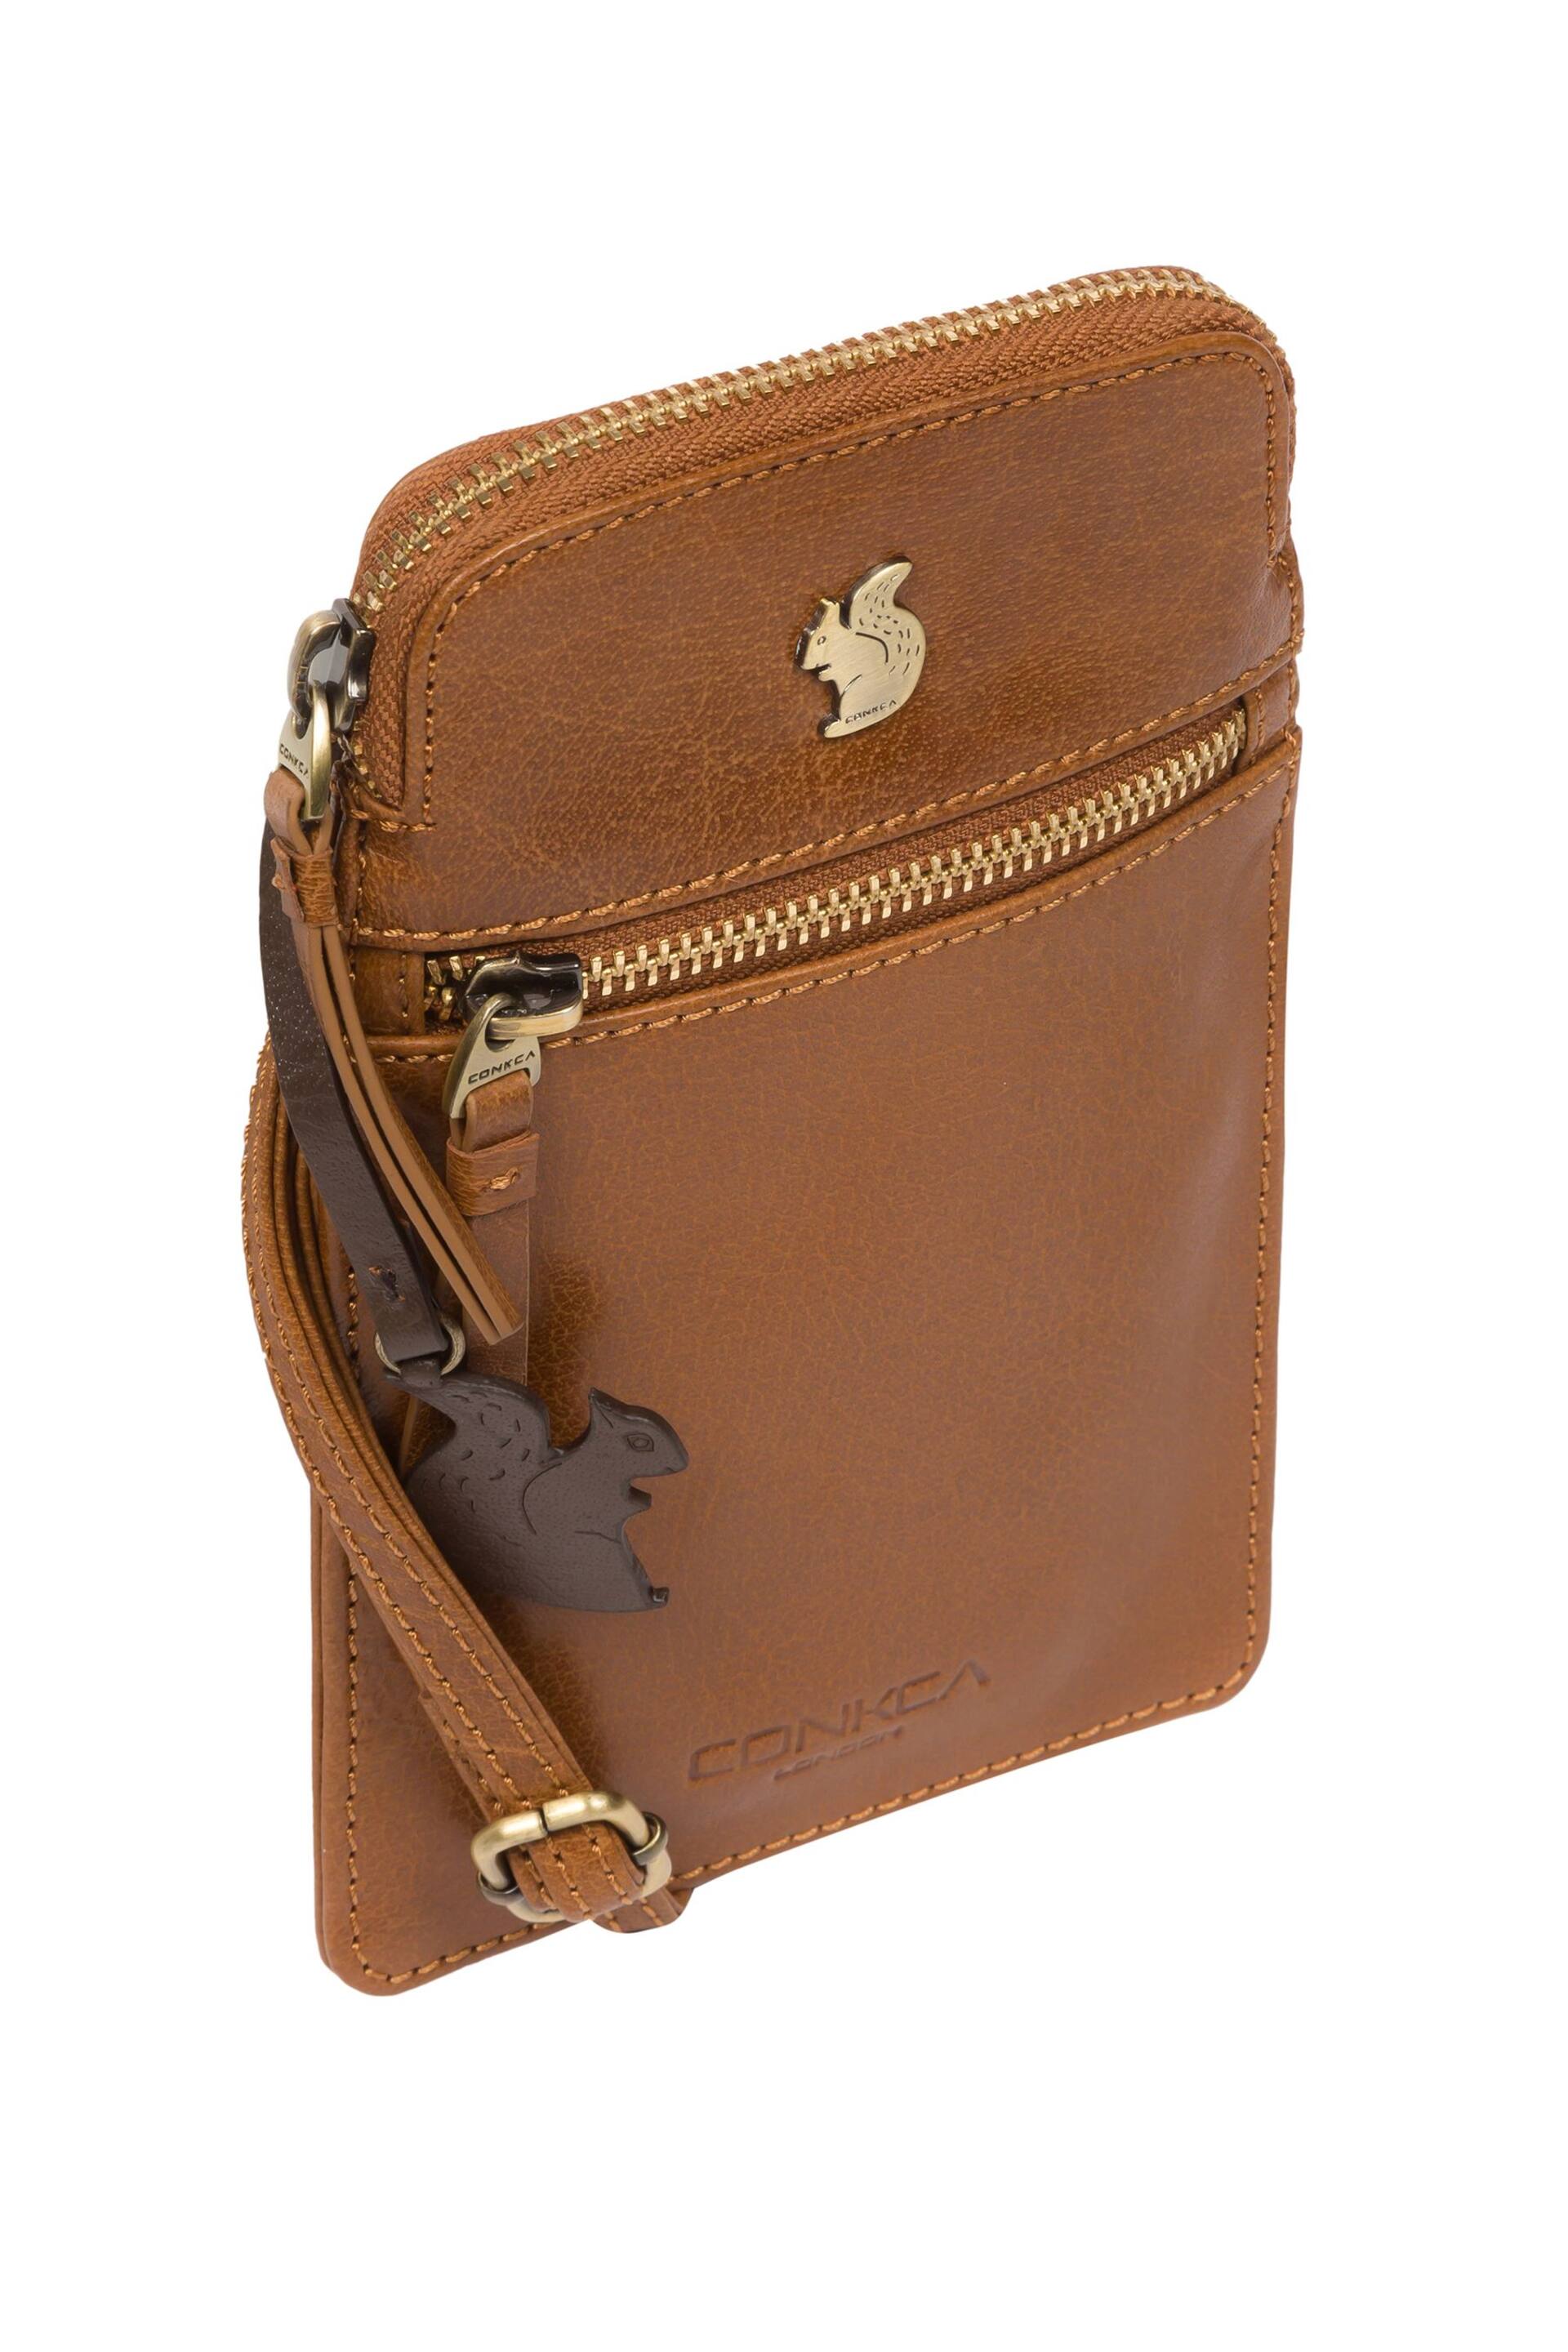 Conkca Bambino Leather Cross-Body Phone Bag - Image 7 of 9